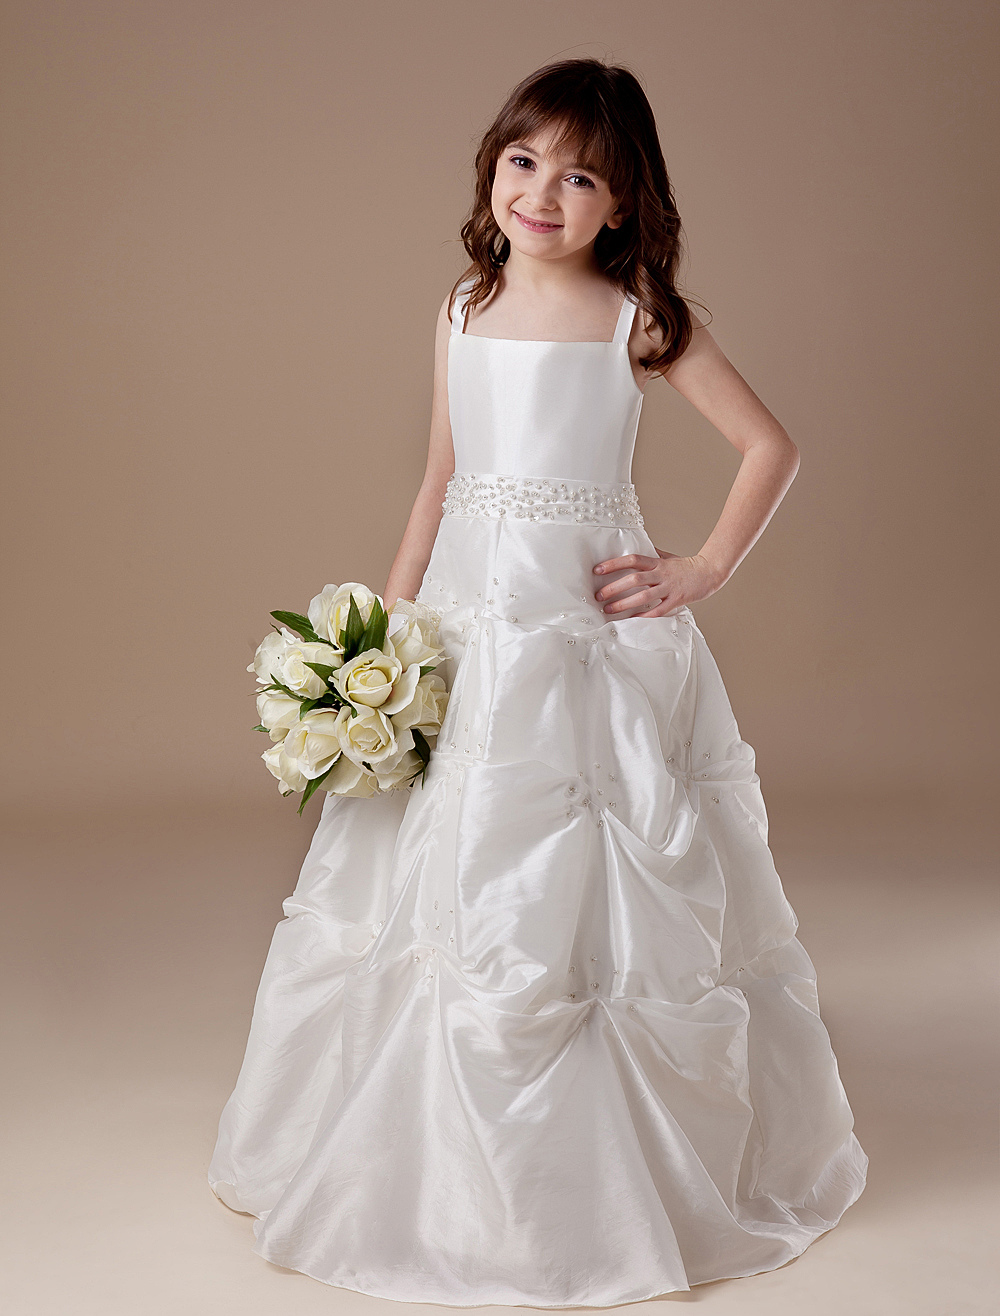 White Sleeveless Ball Gown Taffeta Flower Girl Dress - Milanoo.com